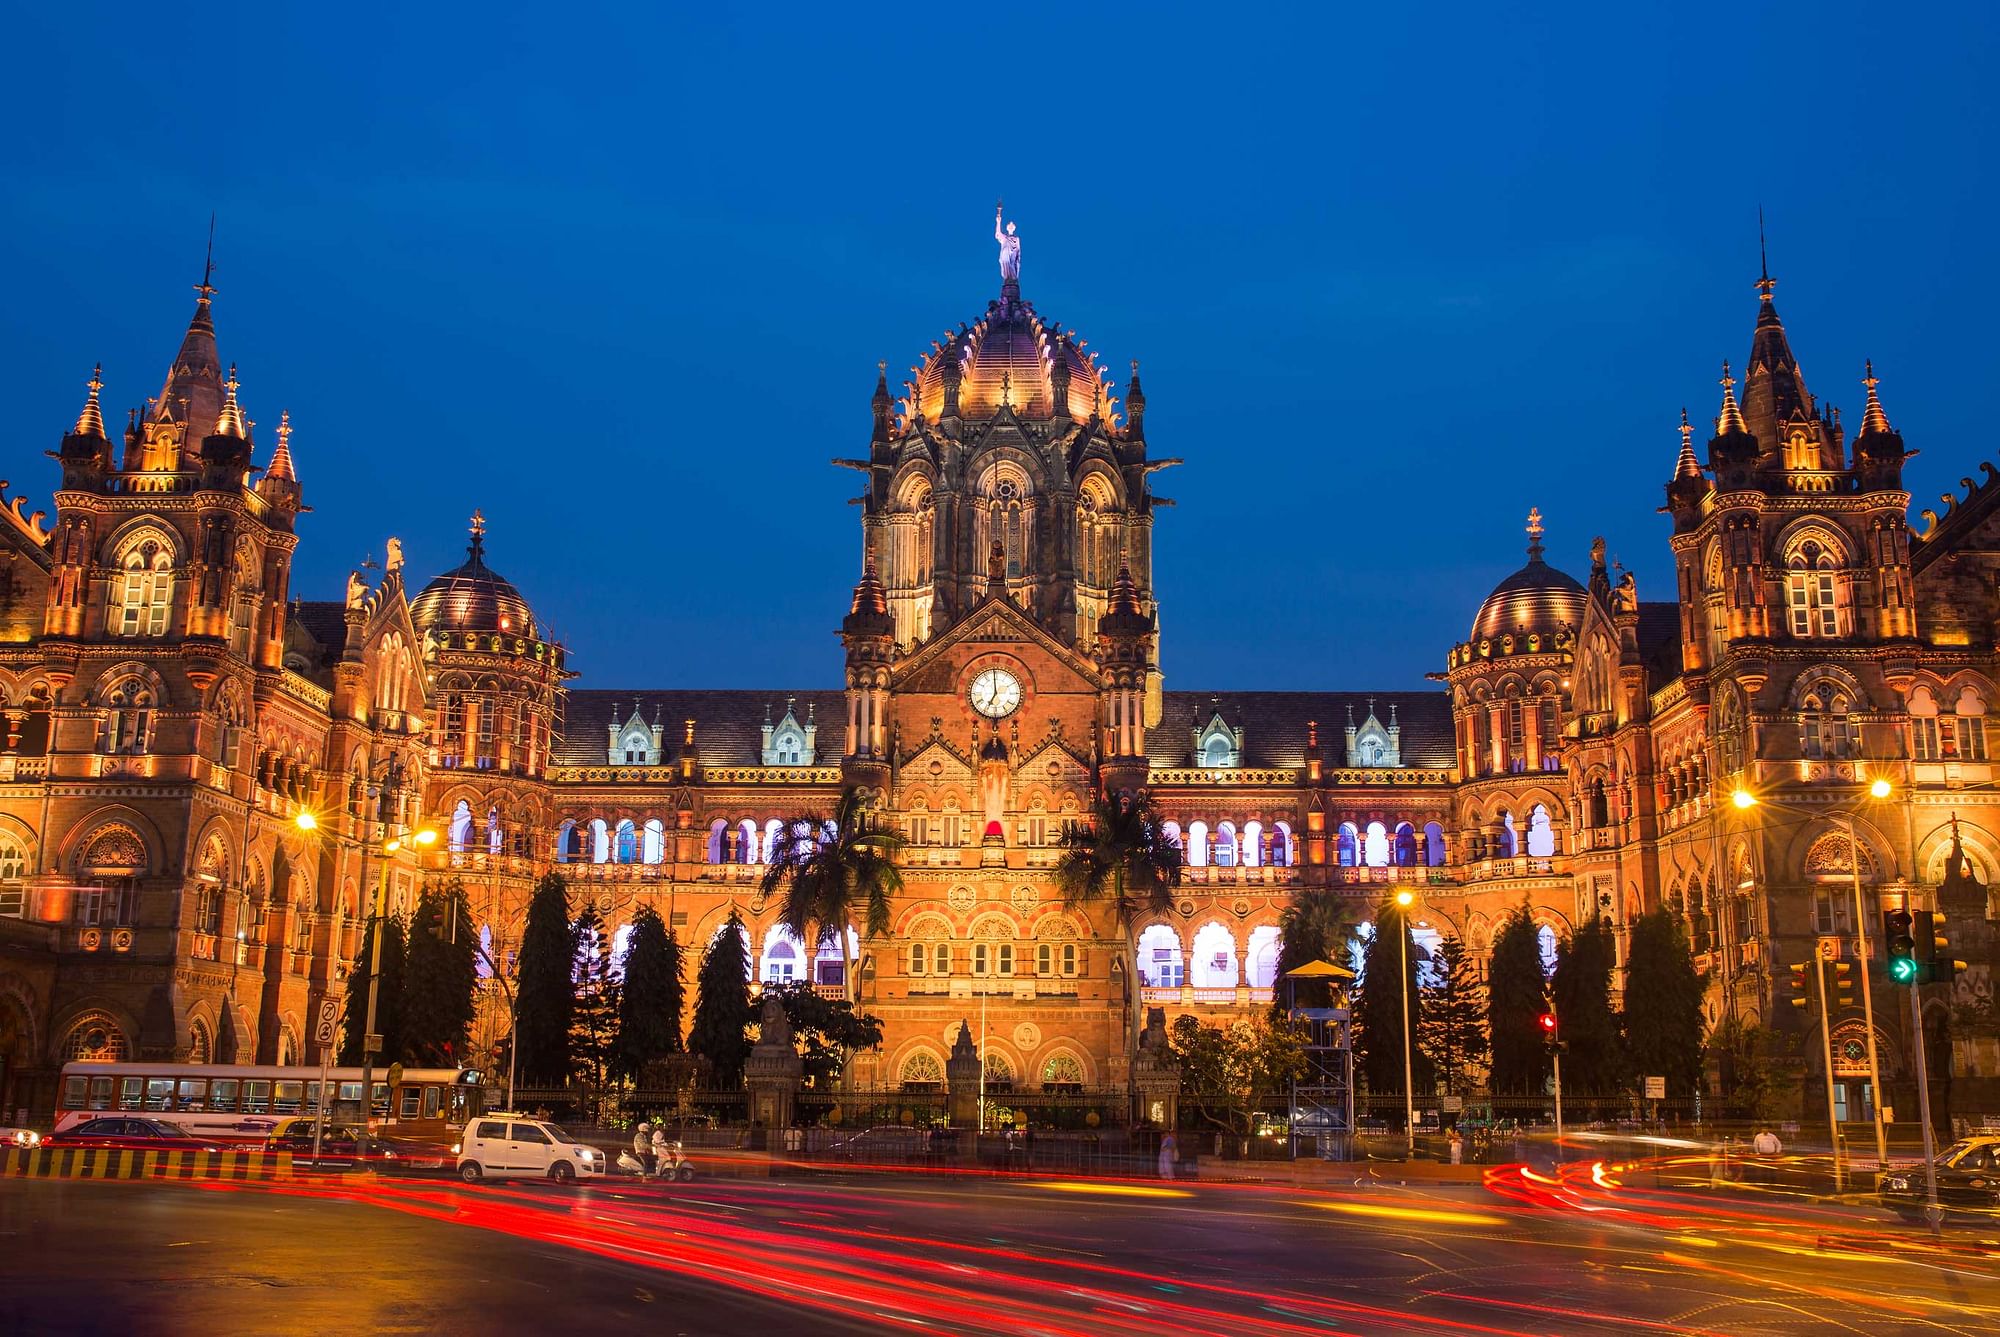 mumbai most visit place